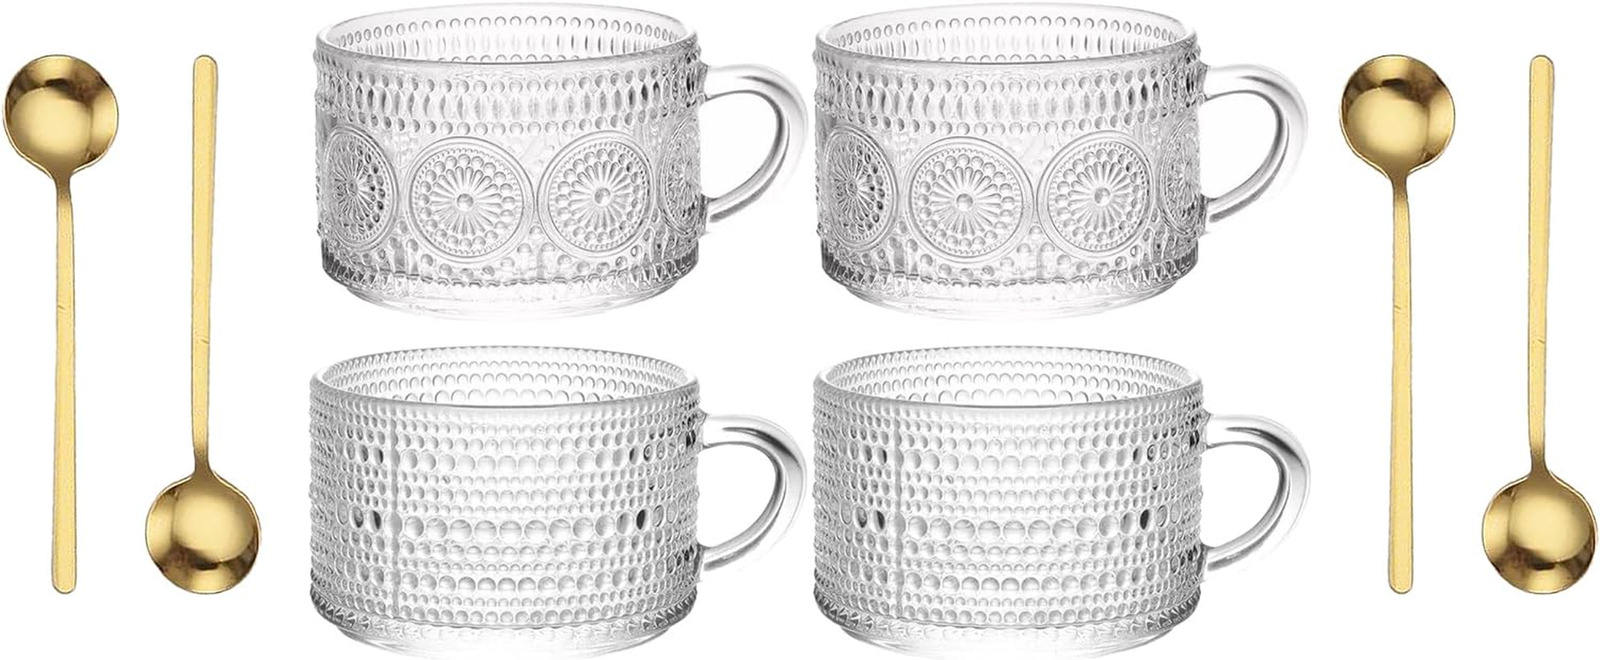 Vintage Glass Coffee Mugs 14 Oz Set of 4 Embossed Glass Cups for Tea, Coffee Mug